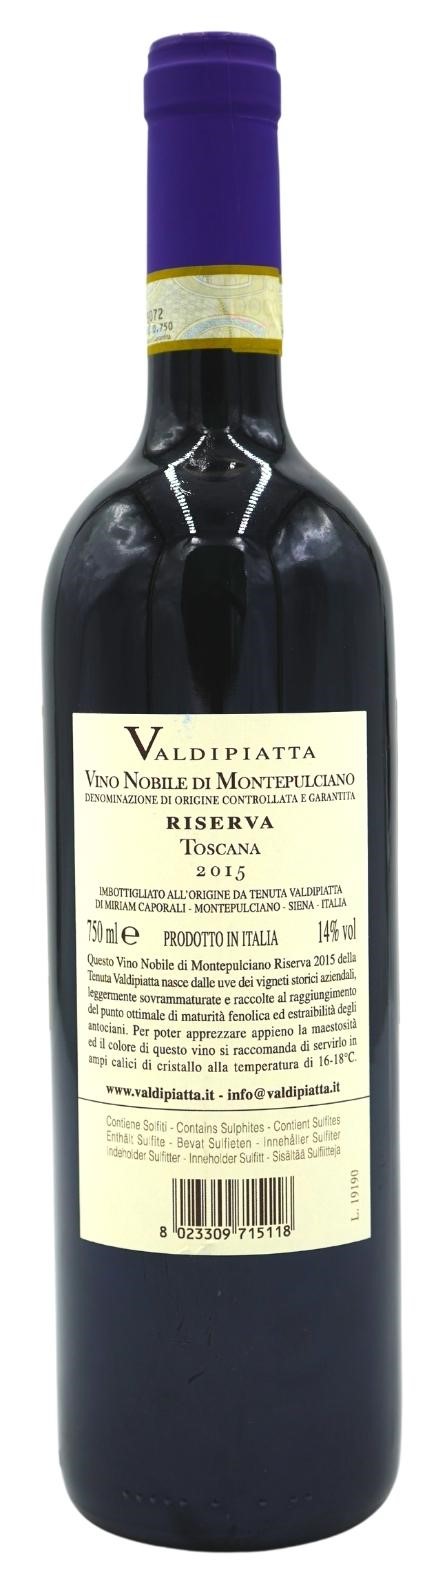 2015 Vino Nobile di Montepulciano Riserva